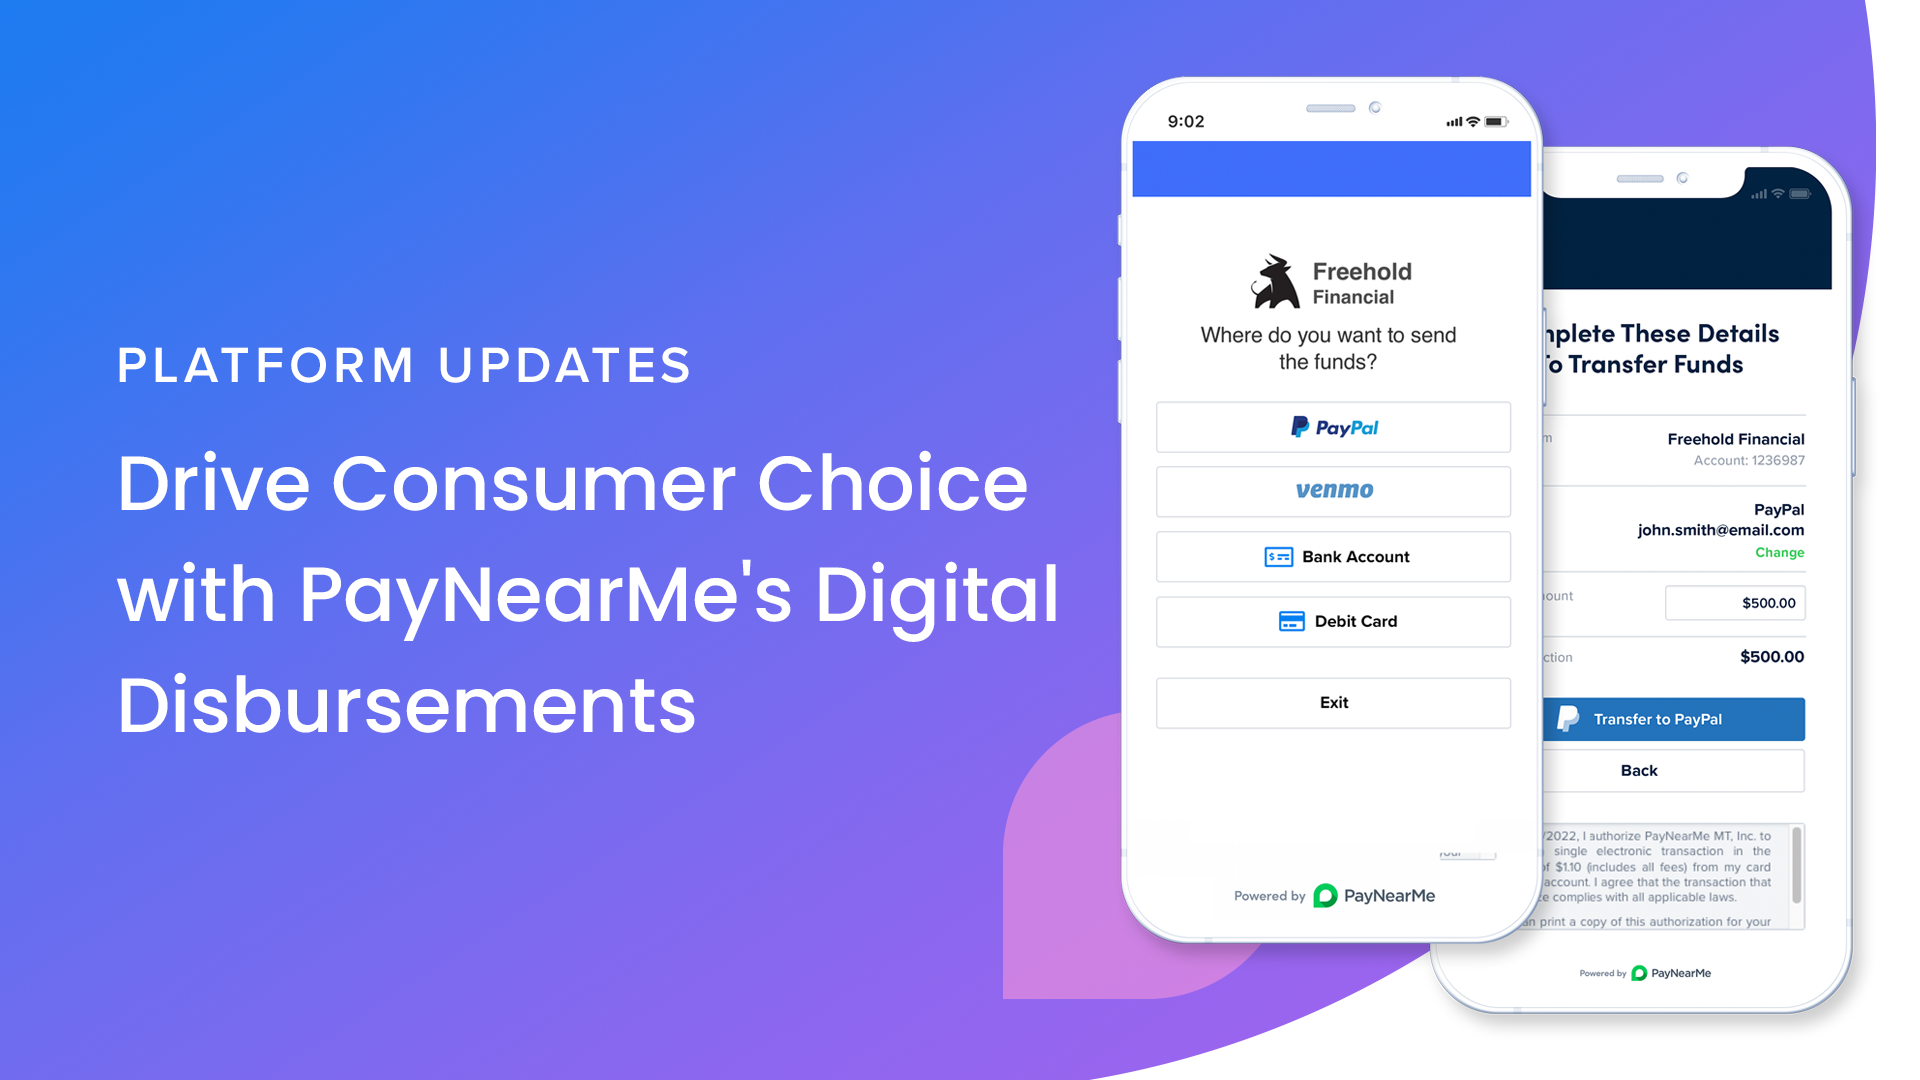 Drive Consumer Choice with PayNearMe’s Digital Disbursements